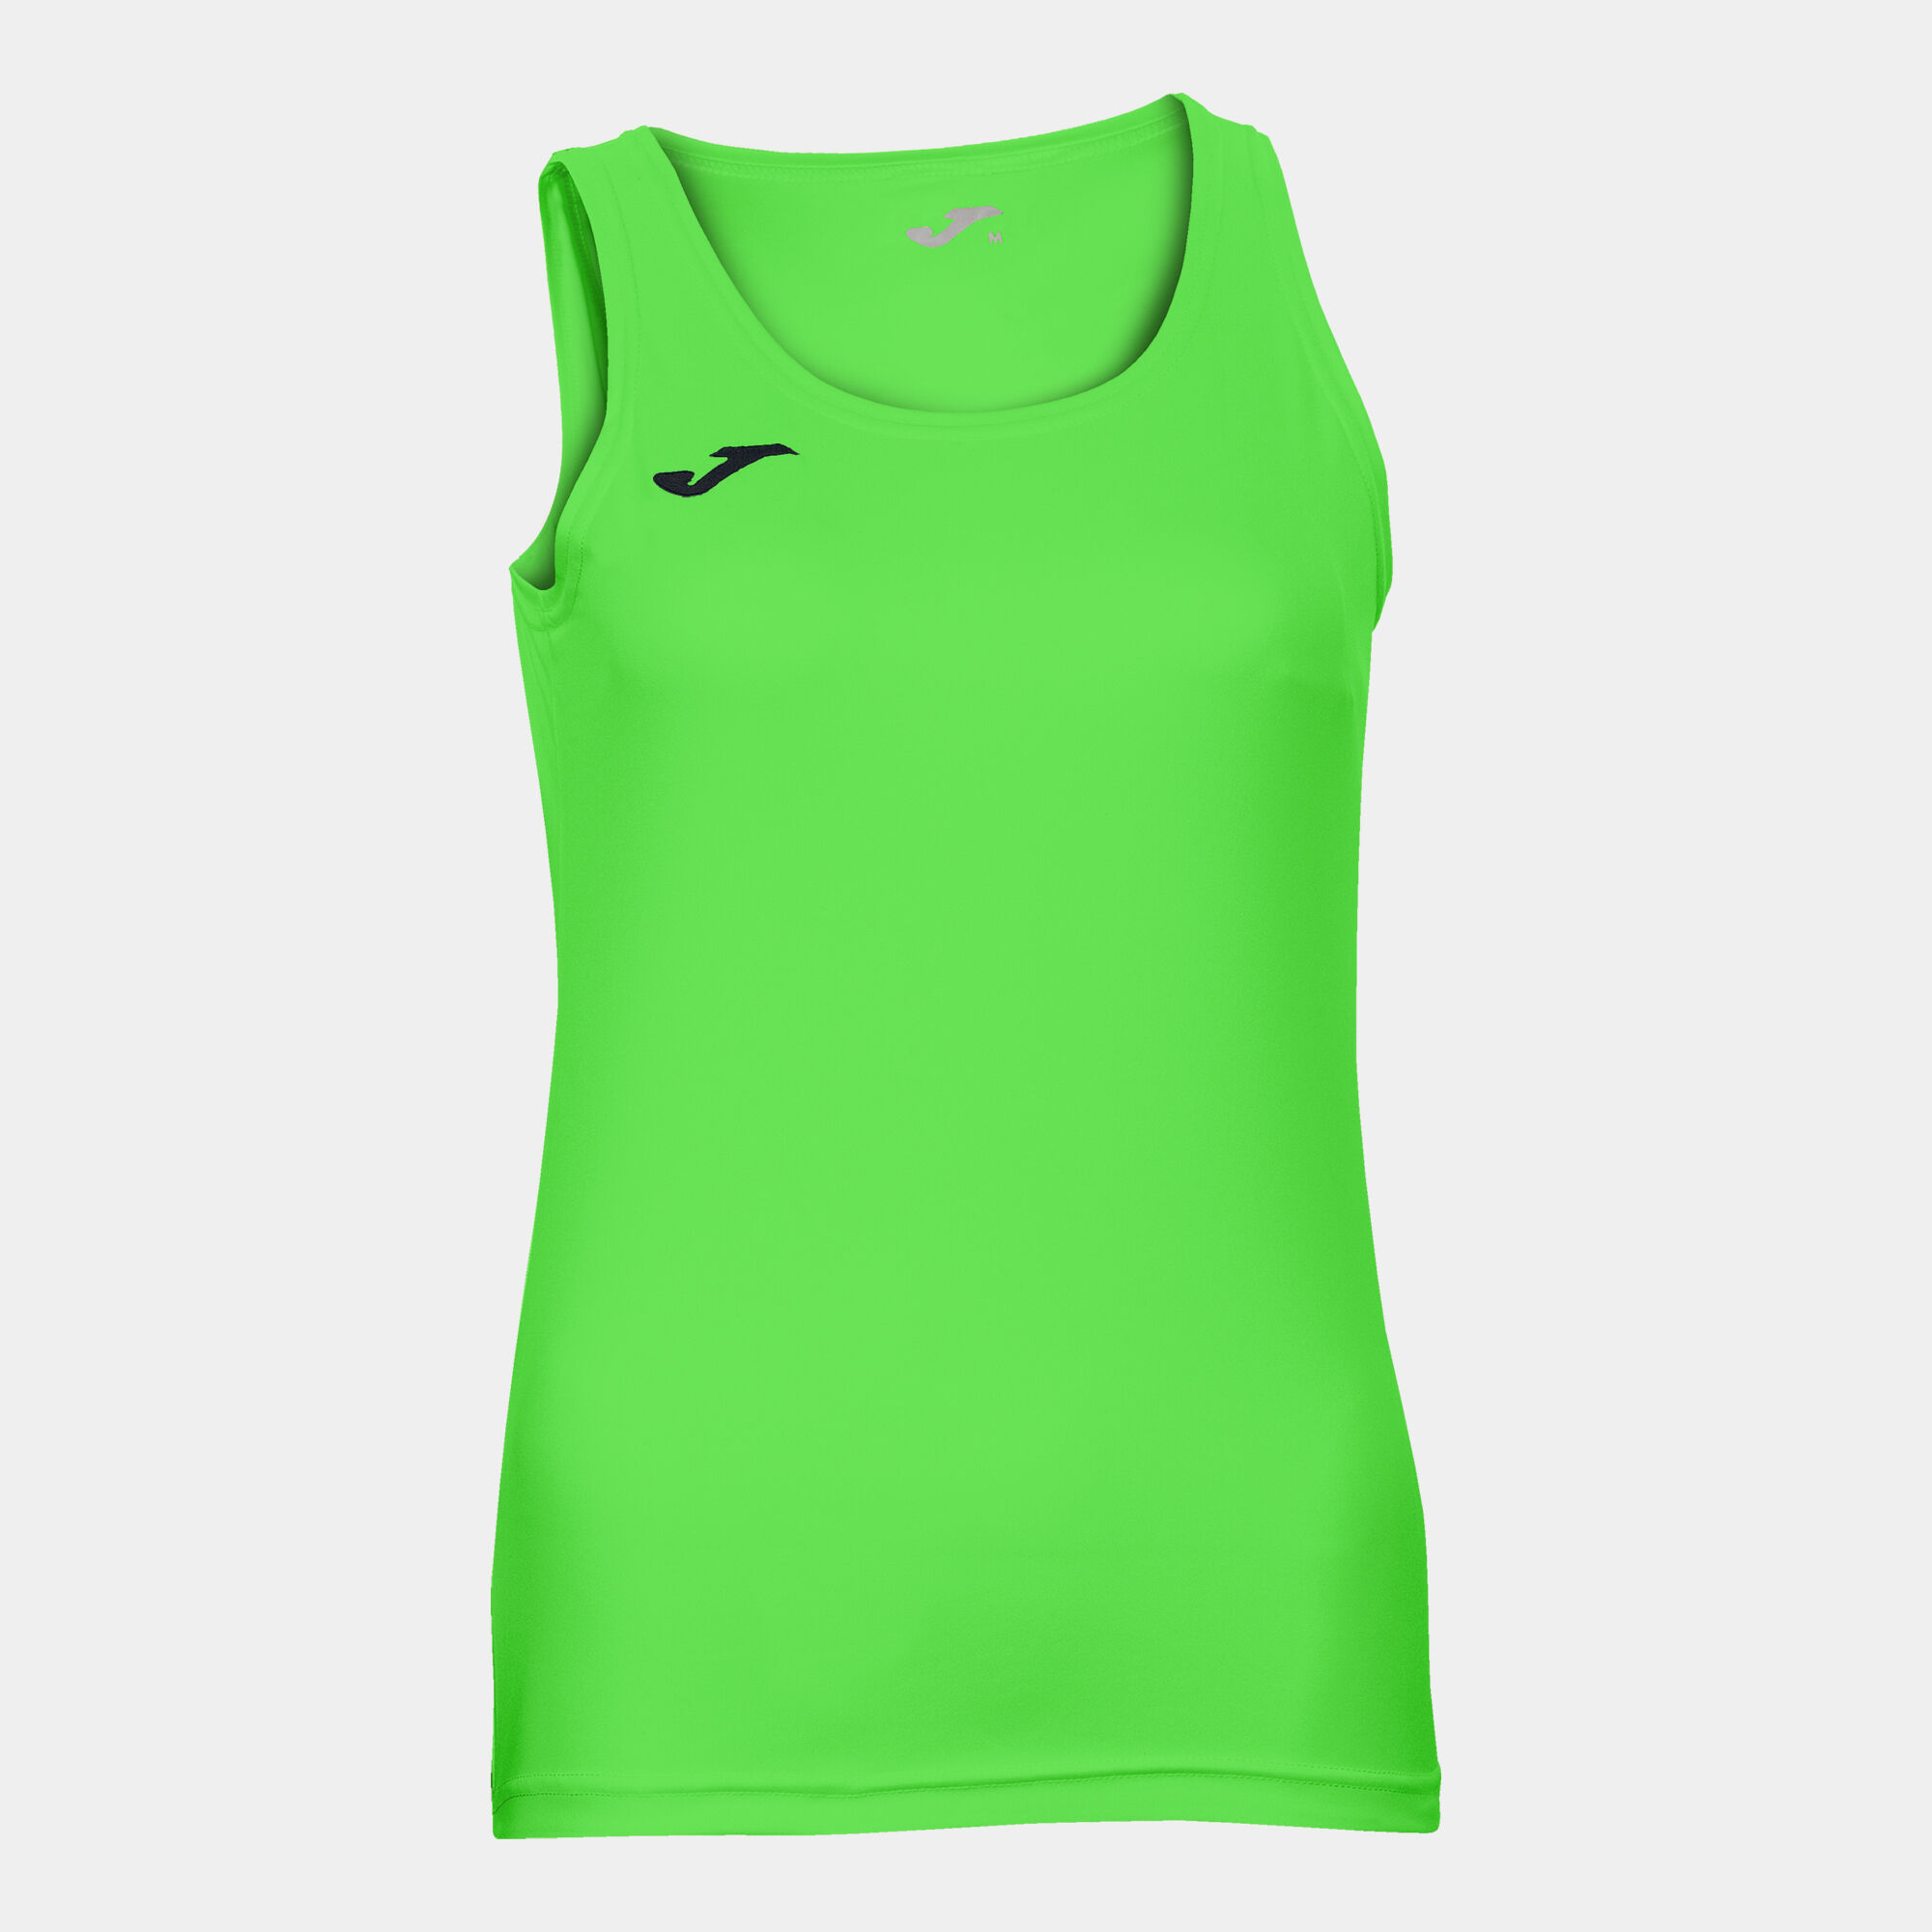 Camiseta sin mangas mujer Diana verde flúor